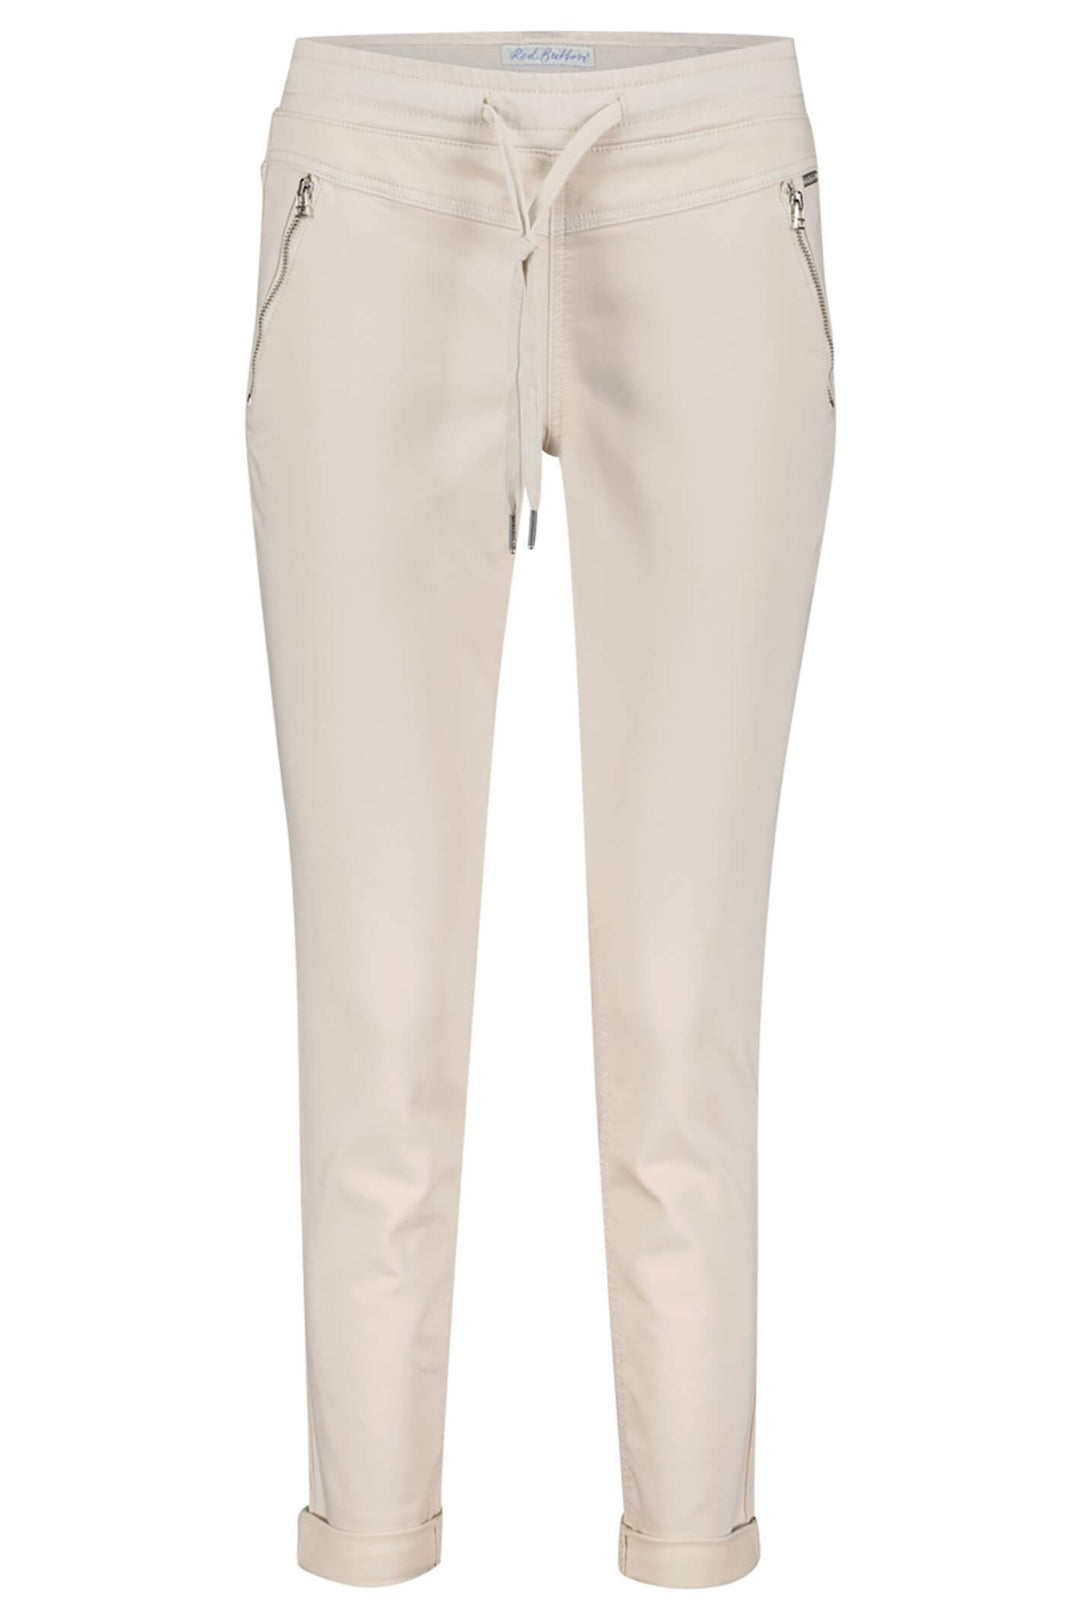 Red Button SRB3936 Kit Stone Tessy Crop Jogger Trousers - Olivia Grace Fashion